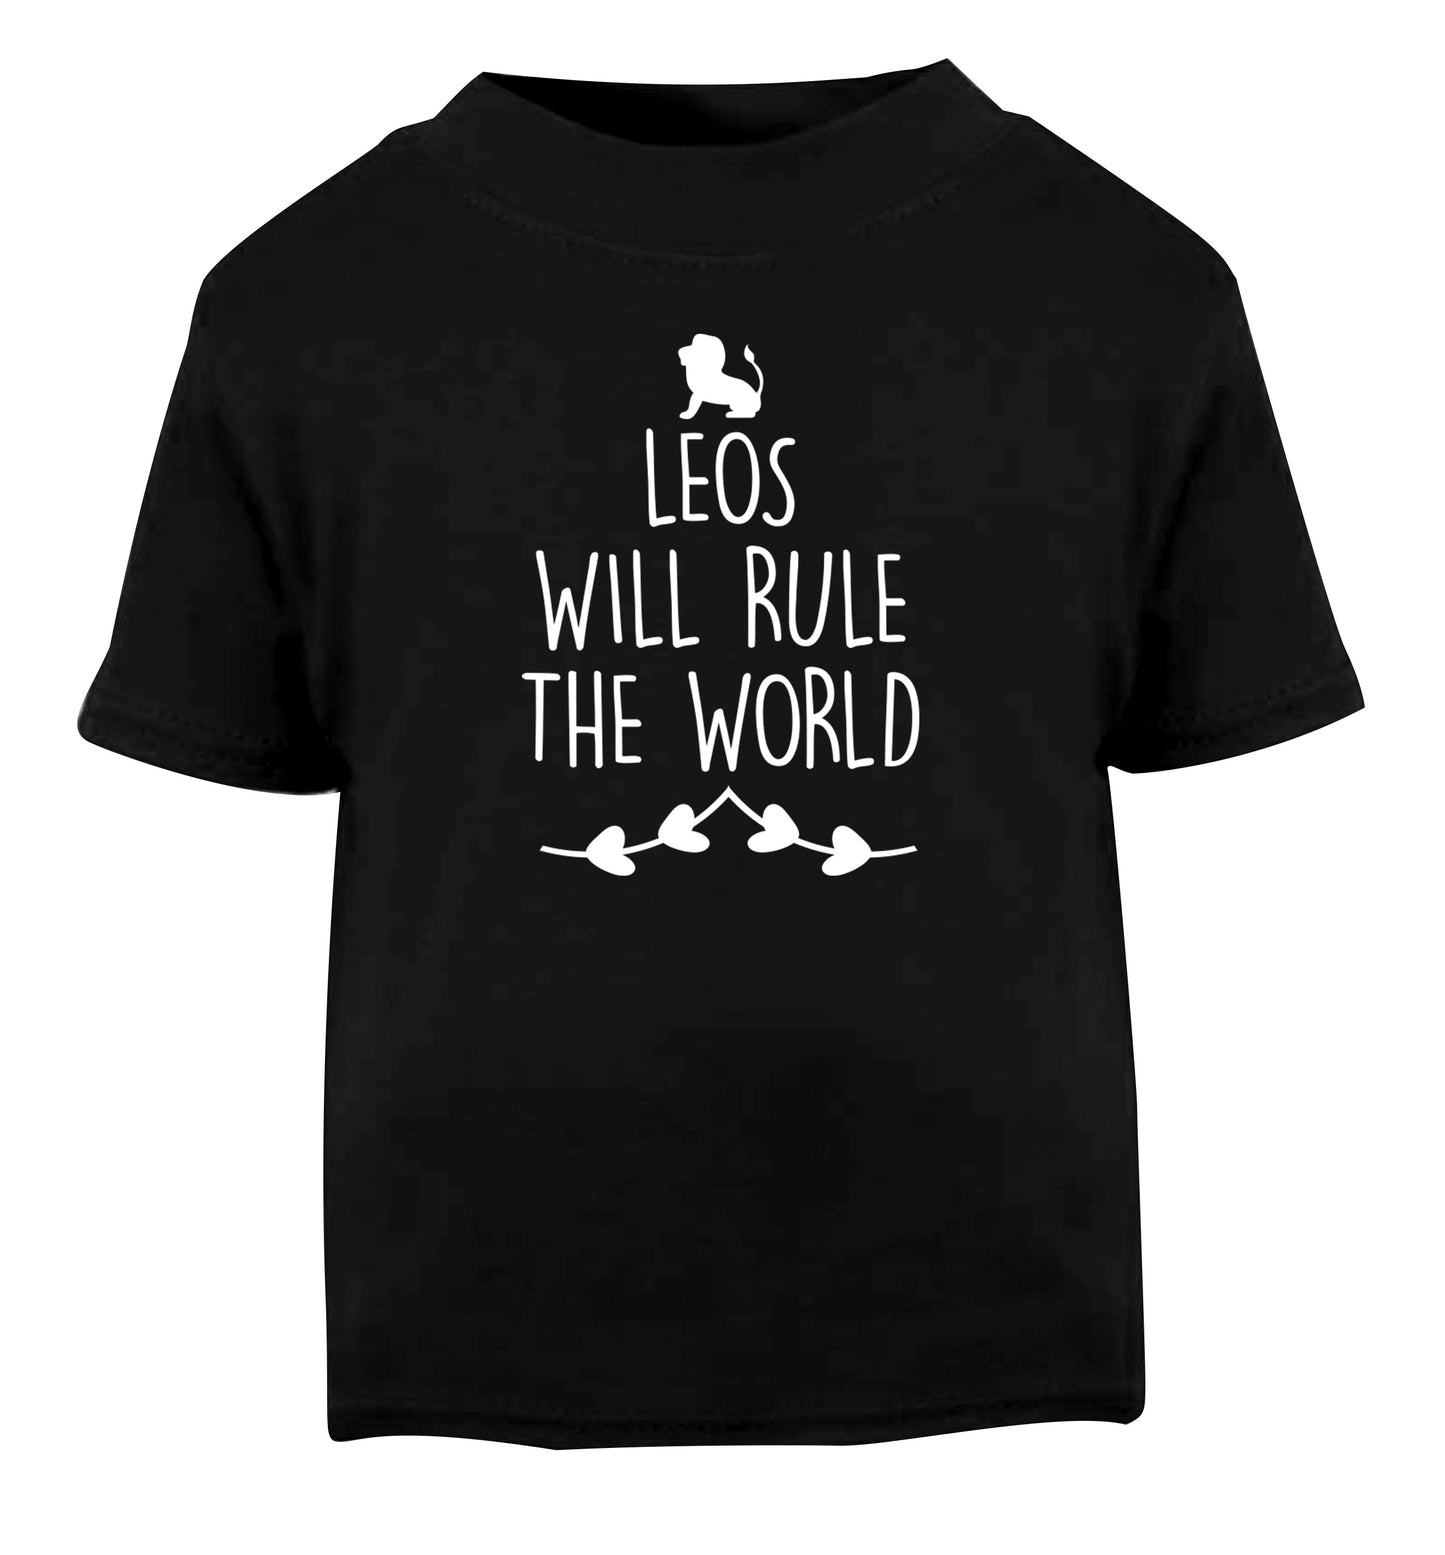 Leos will run the world Black Baby Toddler Tshirt 2 years